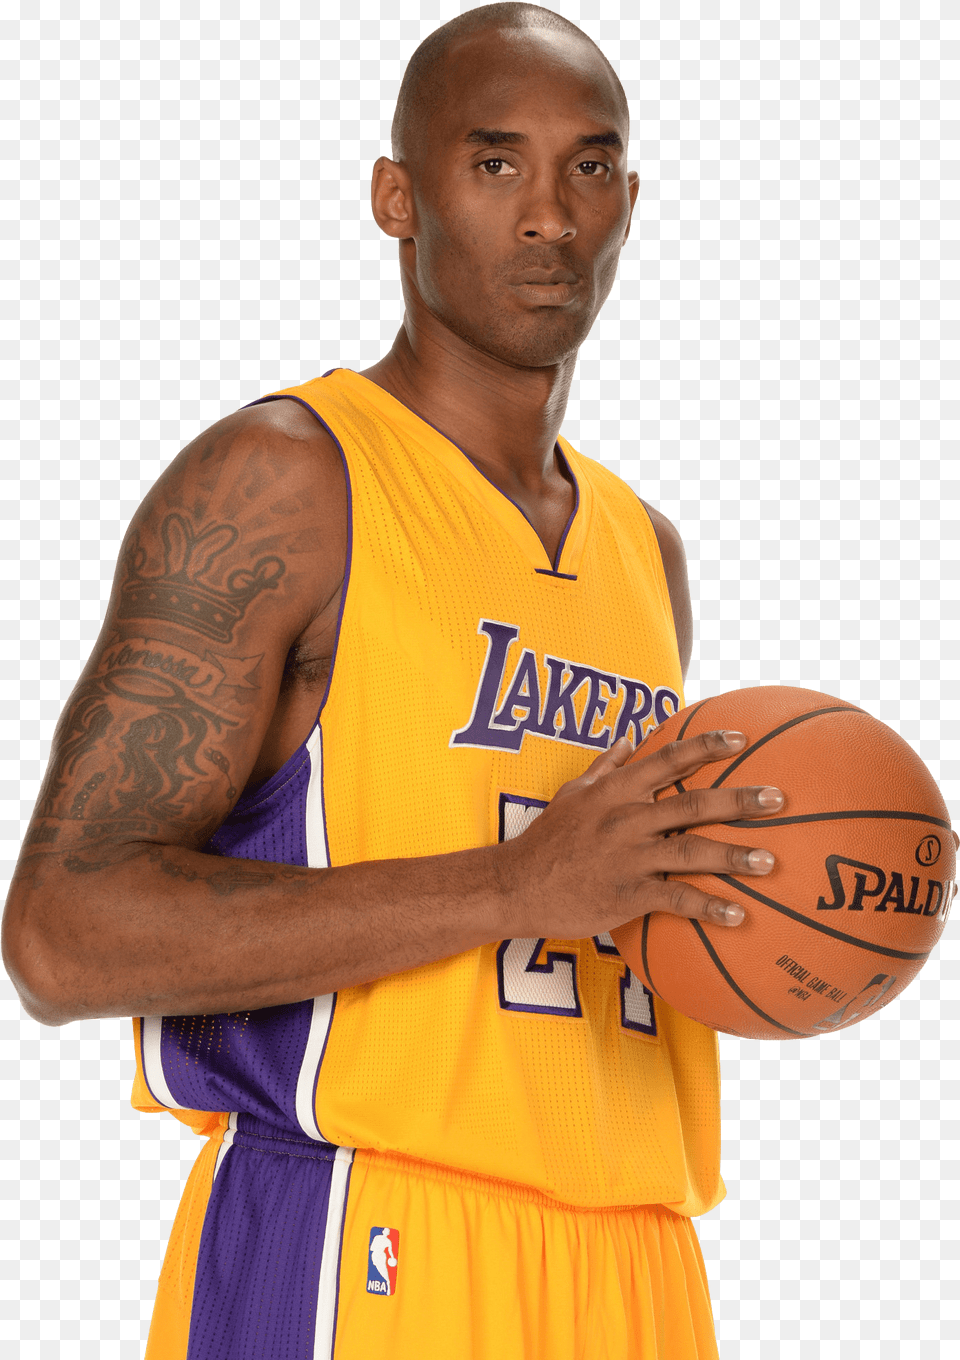 Download Nba Player For Free Kobe Bryant Images Download, Sport, Ball, Basketball, Basketball (ball) Png Image